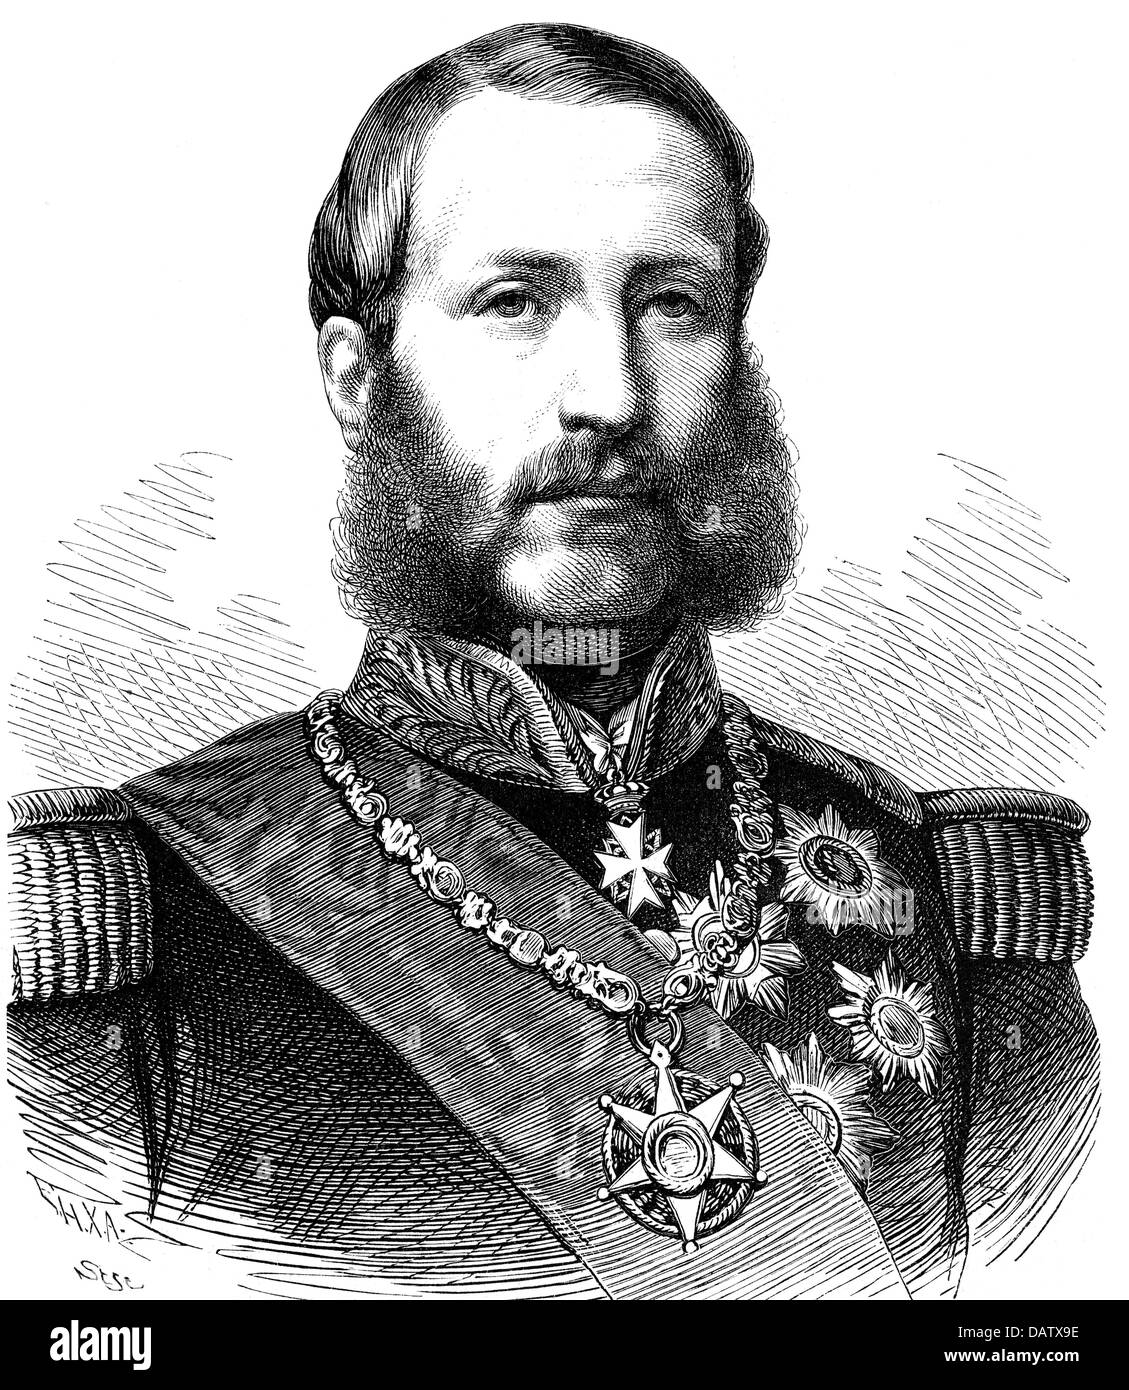 Philip, 24.3.1837 - 17.11.1905, Prince of Belgium, Count of Flanders 16.12.1840 - 17.11.1905, portrait, wood engraving, 19th century, Stock Photo